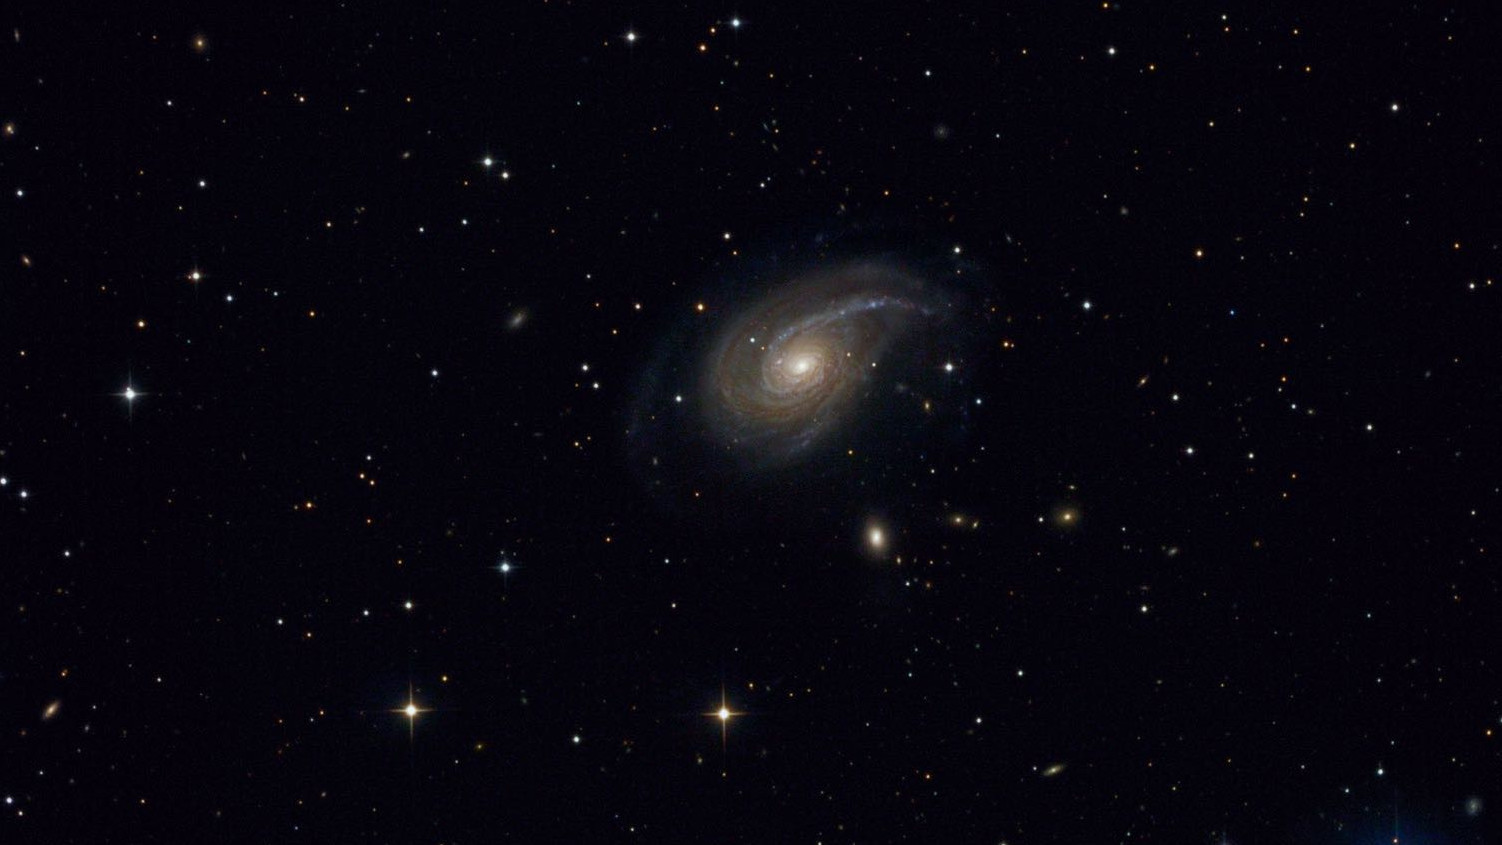 Galaxerna NGC 772 och NGC 770 i stjärnbilden Väduren. Michael Breite,
Stefan Heutz och Wolfgang Ries